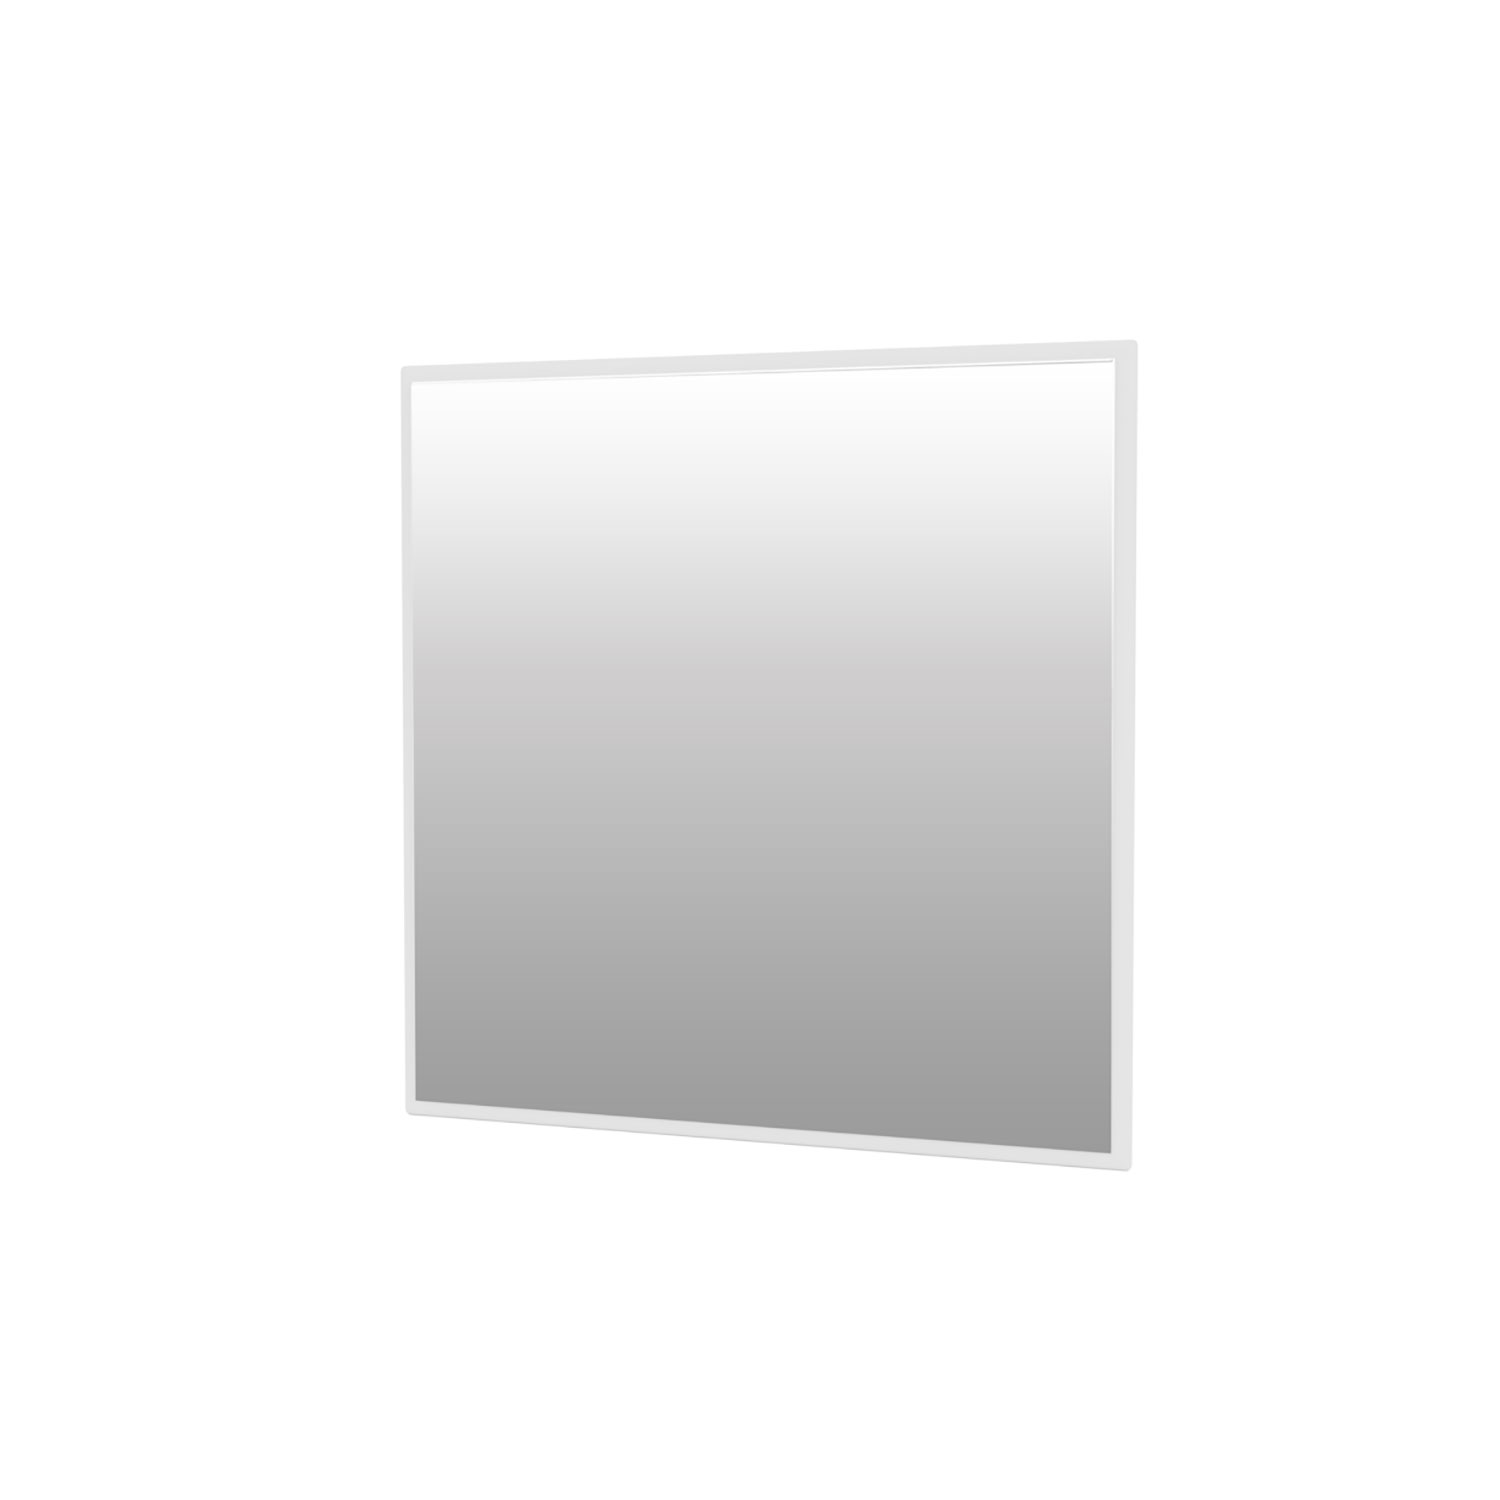 Mini MSQ square mirror, New white